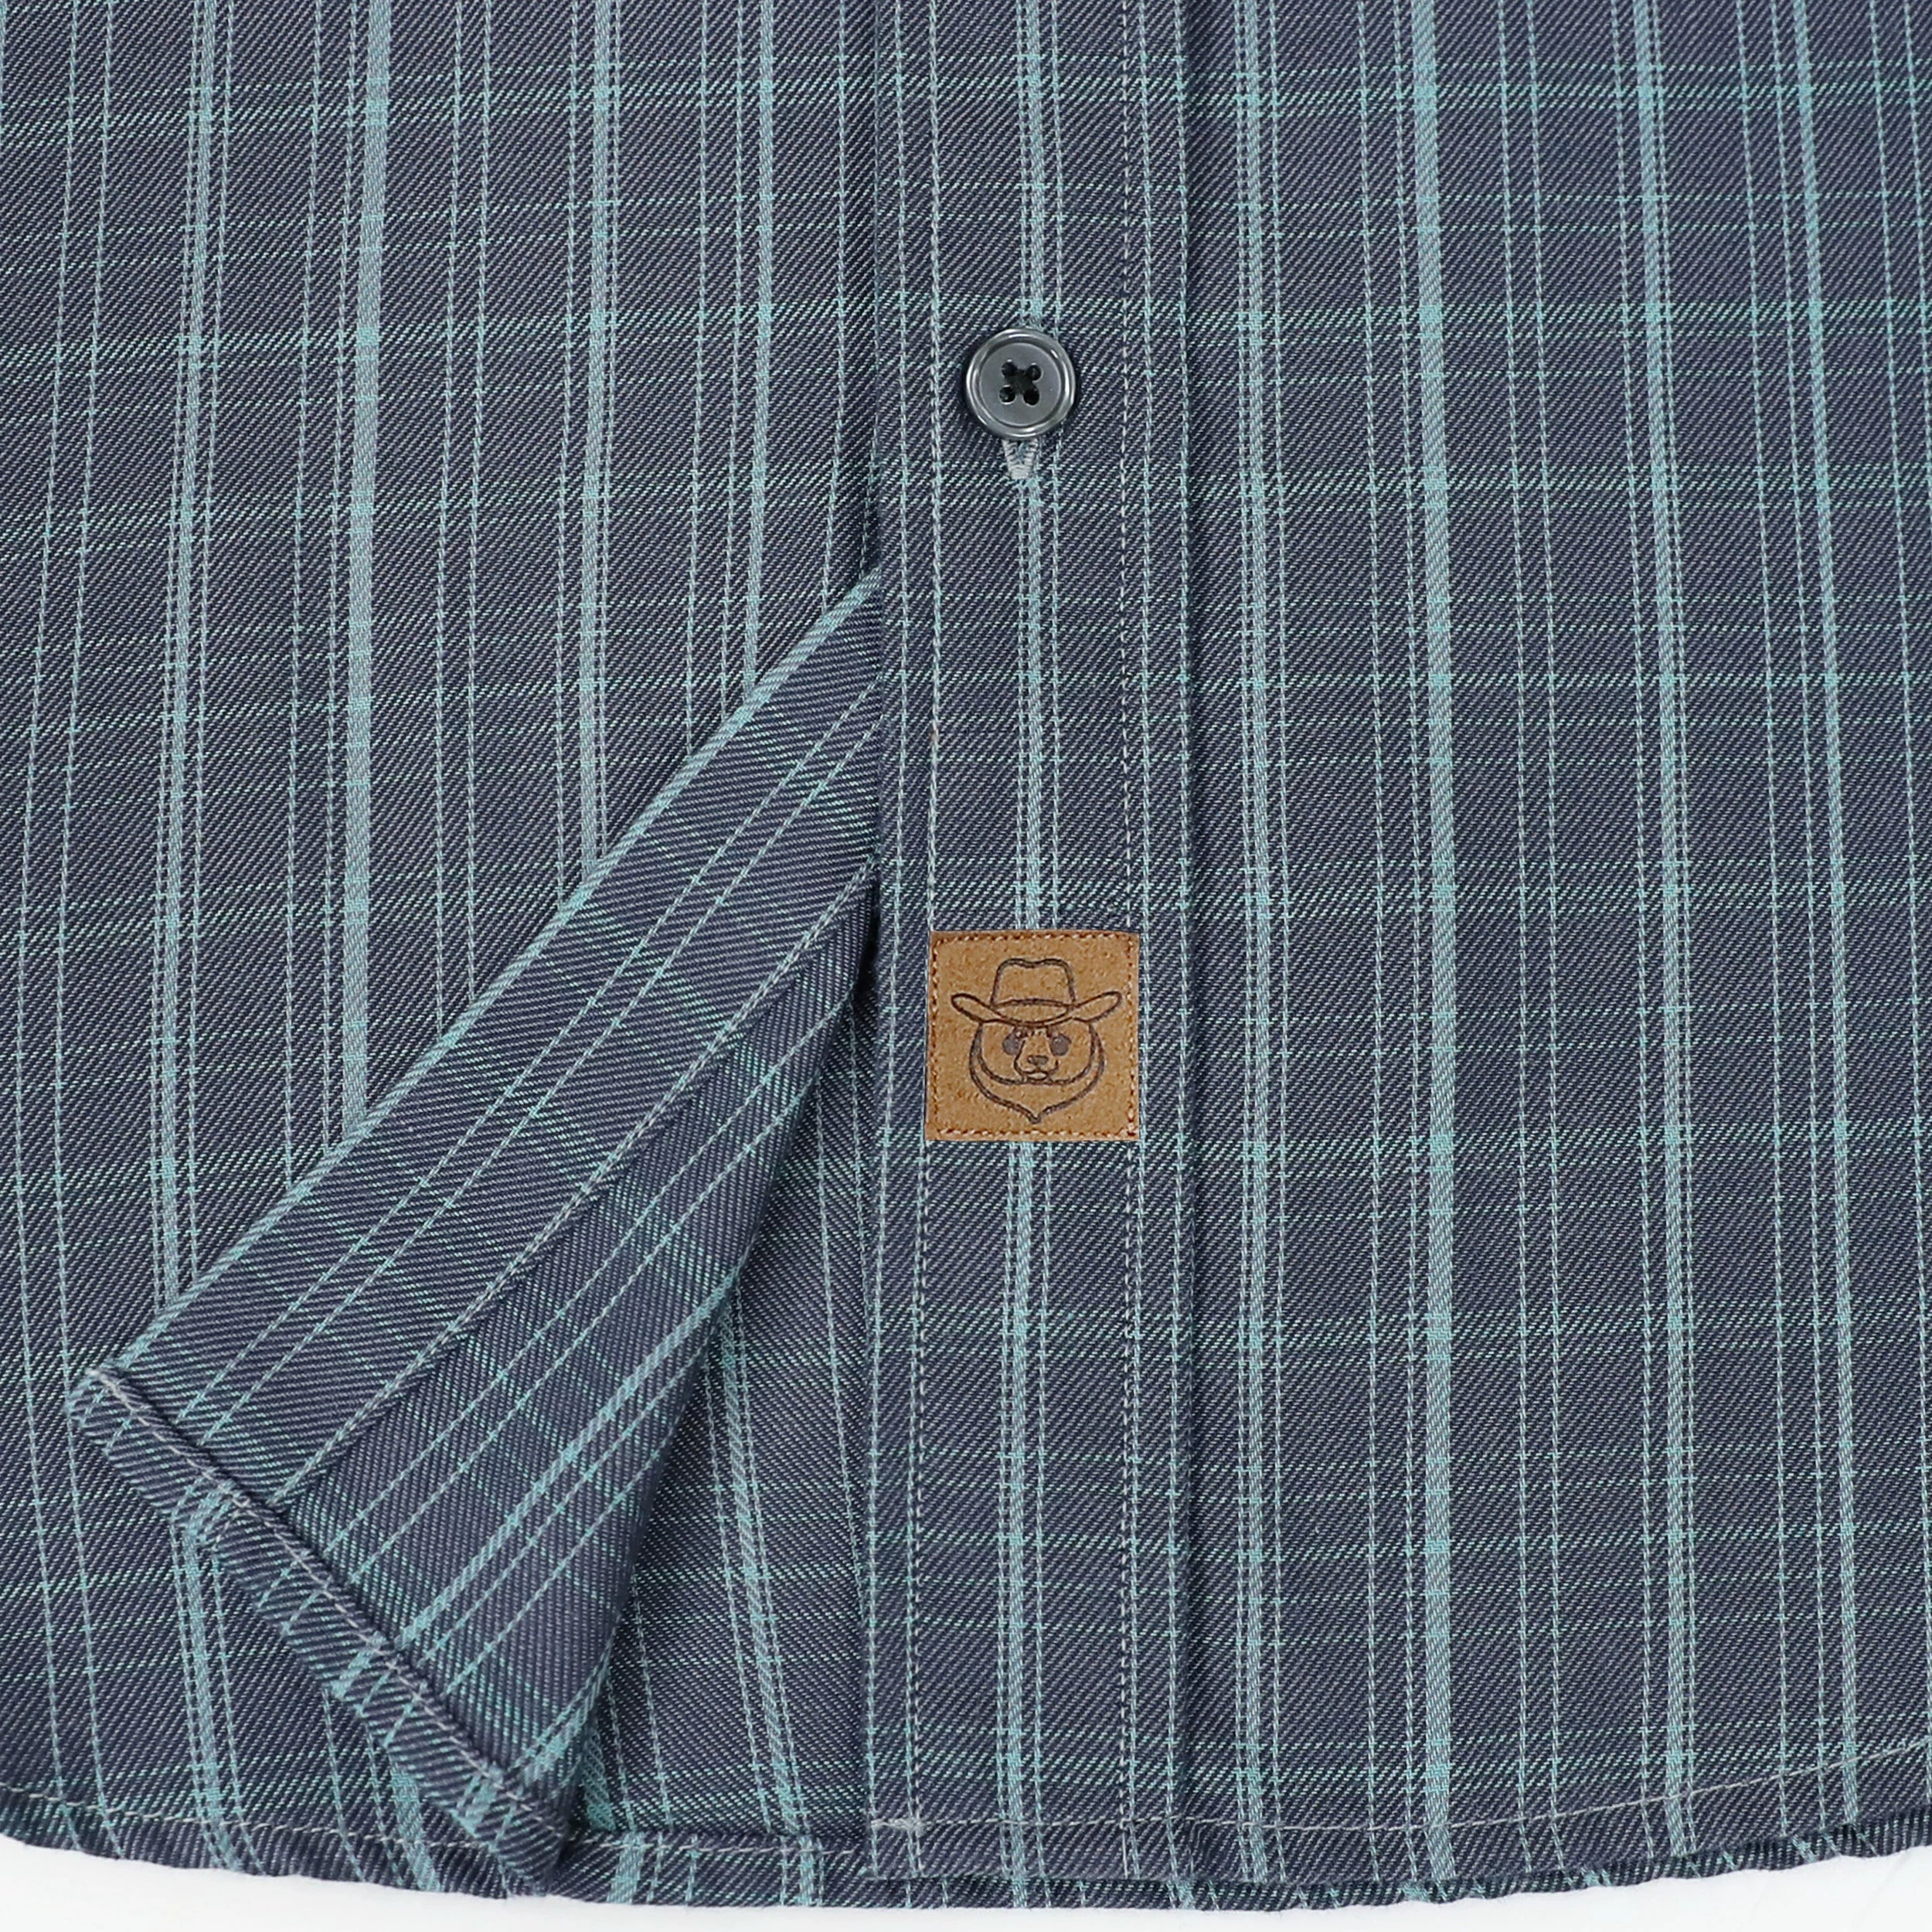 Dubinik® Bamboo Viscose Mens Short Sleeve Button Down Pockets Shirts#39015